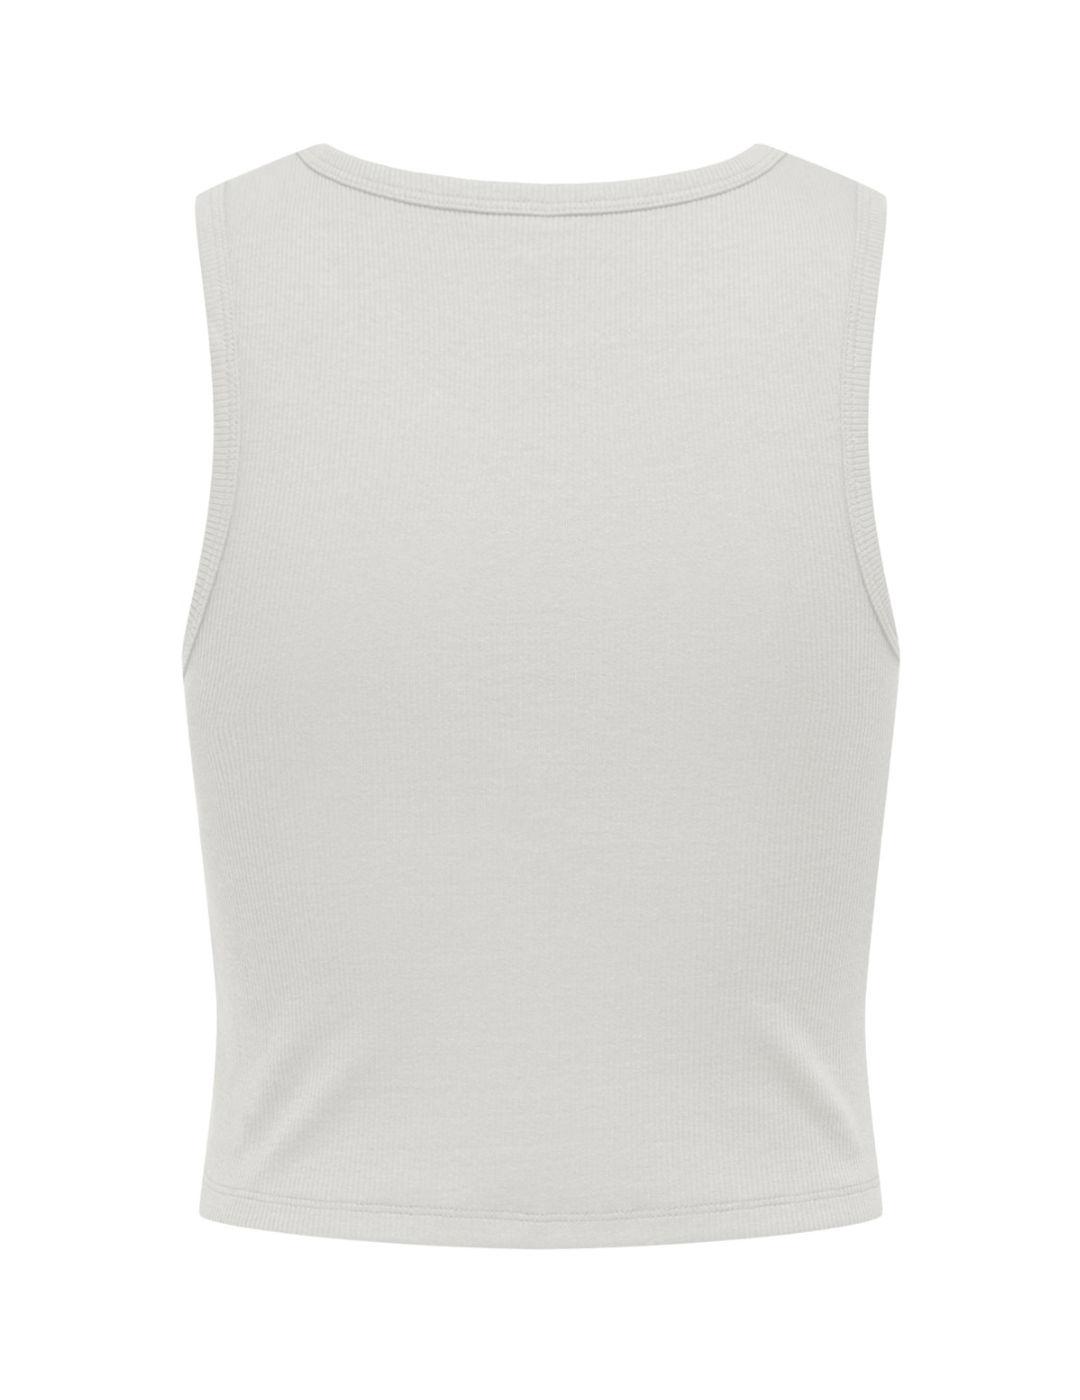 Camiseta Only Velma blanca tirantes anchos ajustada de mujer